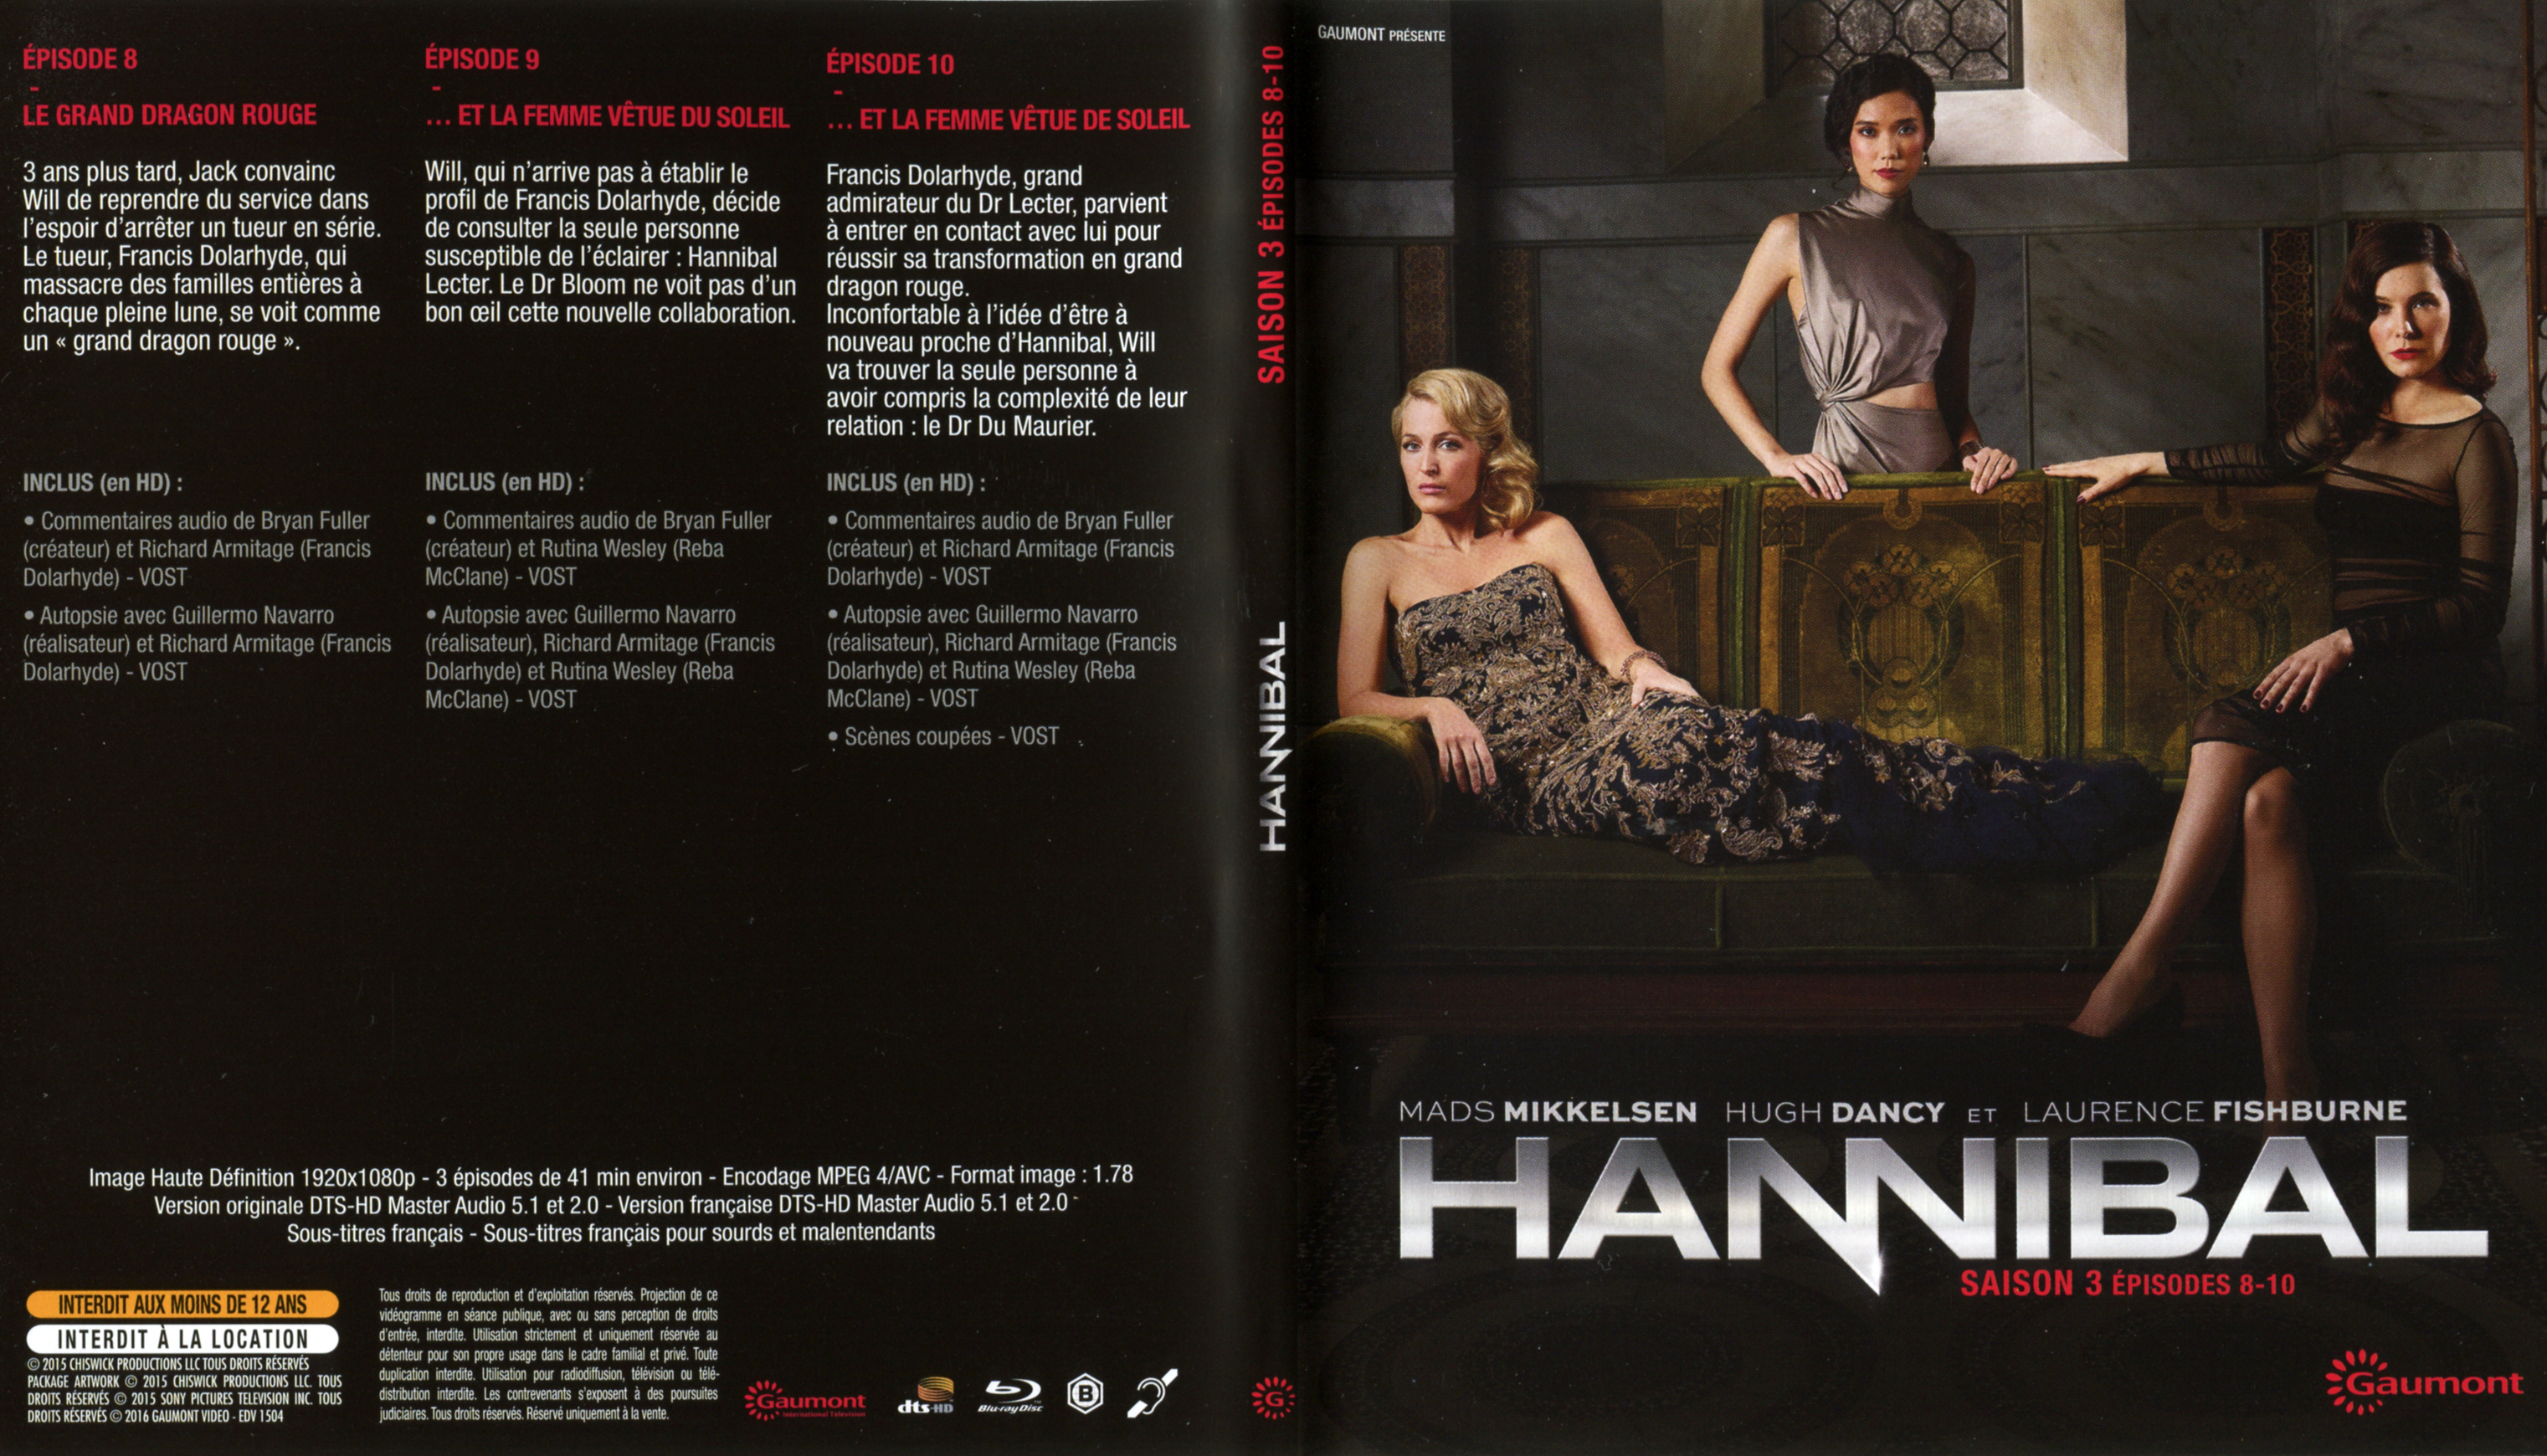 Jaquette DVD Hannibal Saison 3 DISC 3